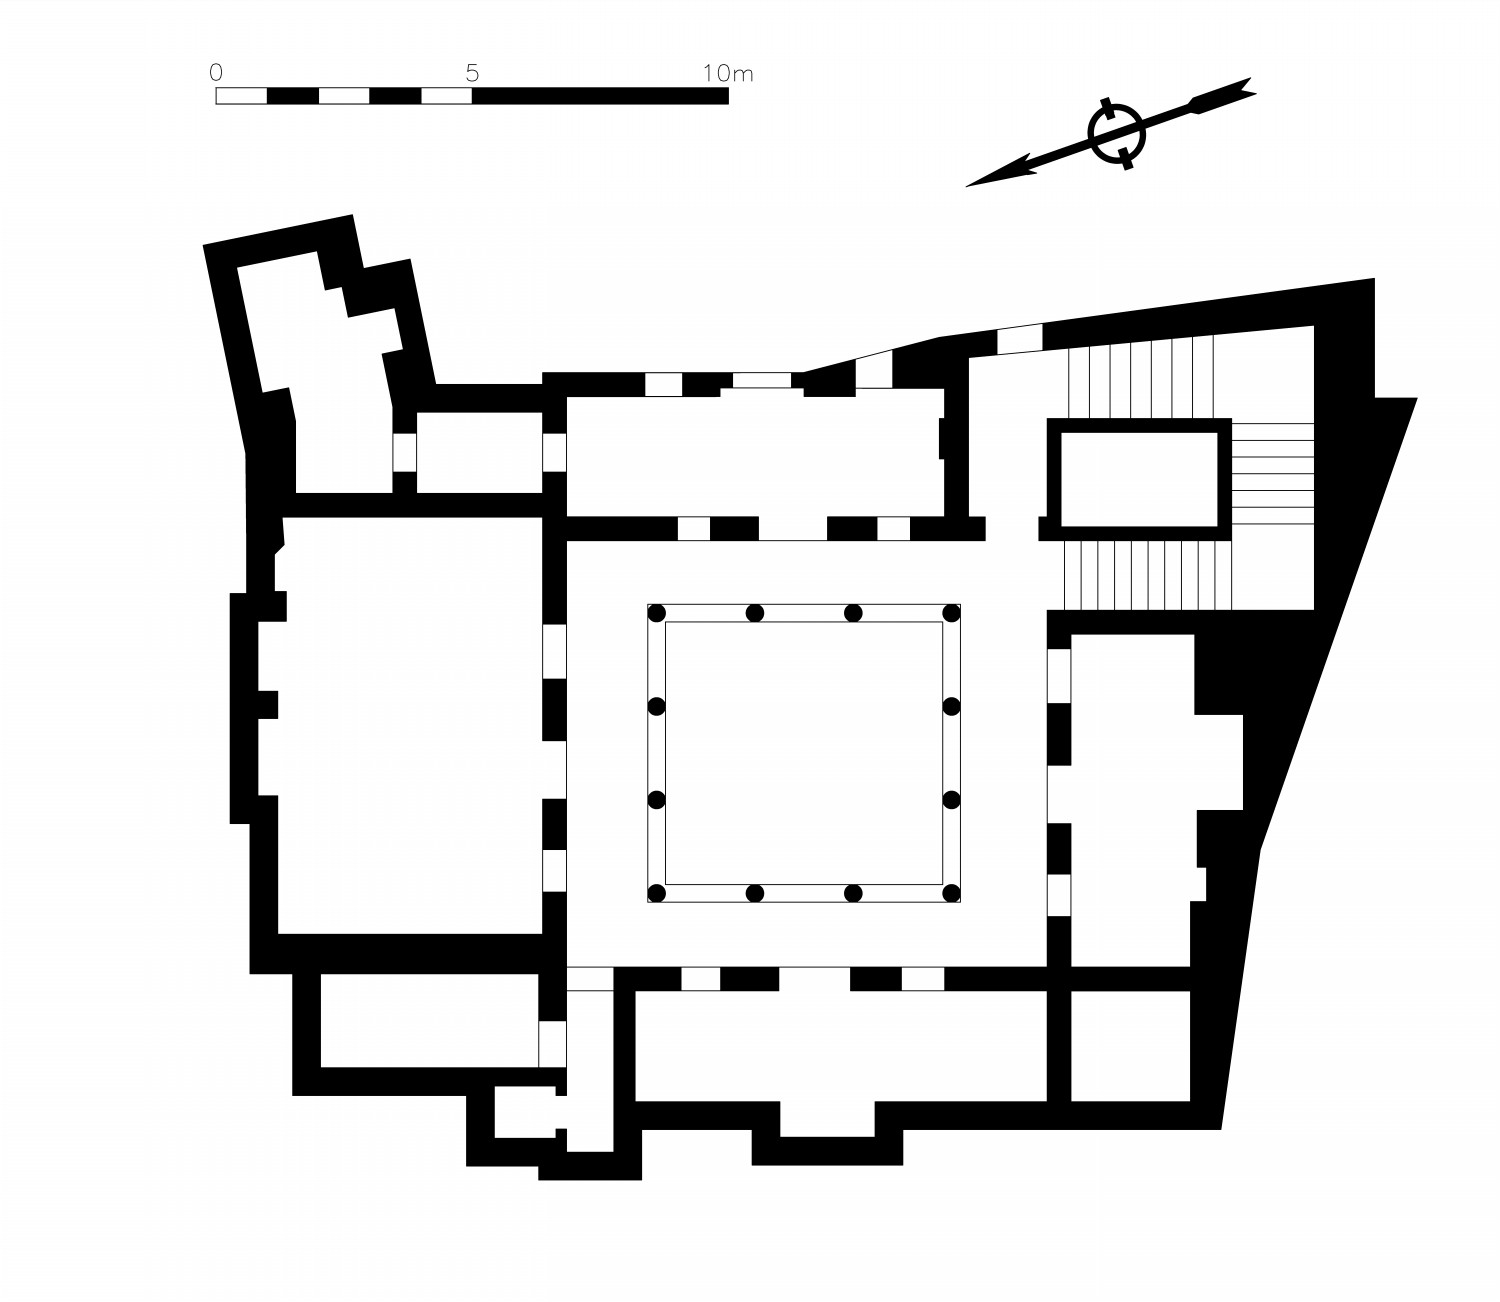 Dar Bakri - Plan of the second floor, Based on Golvin (1988)